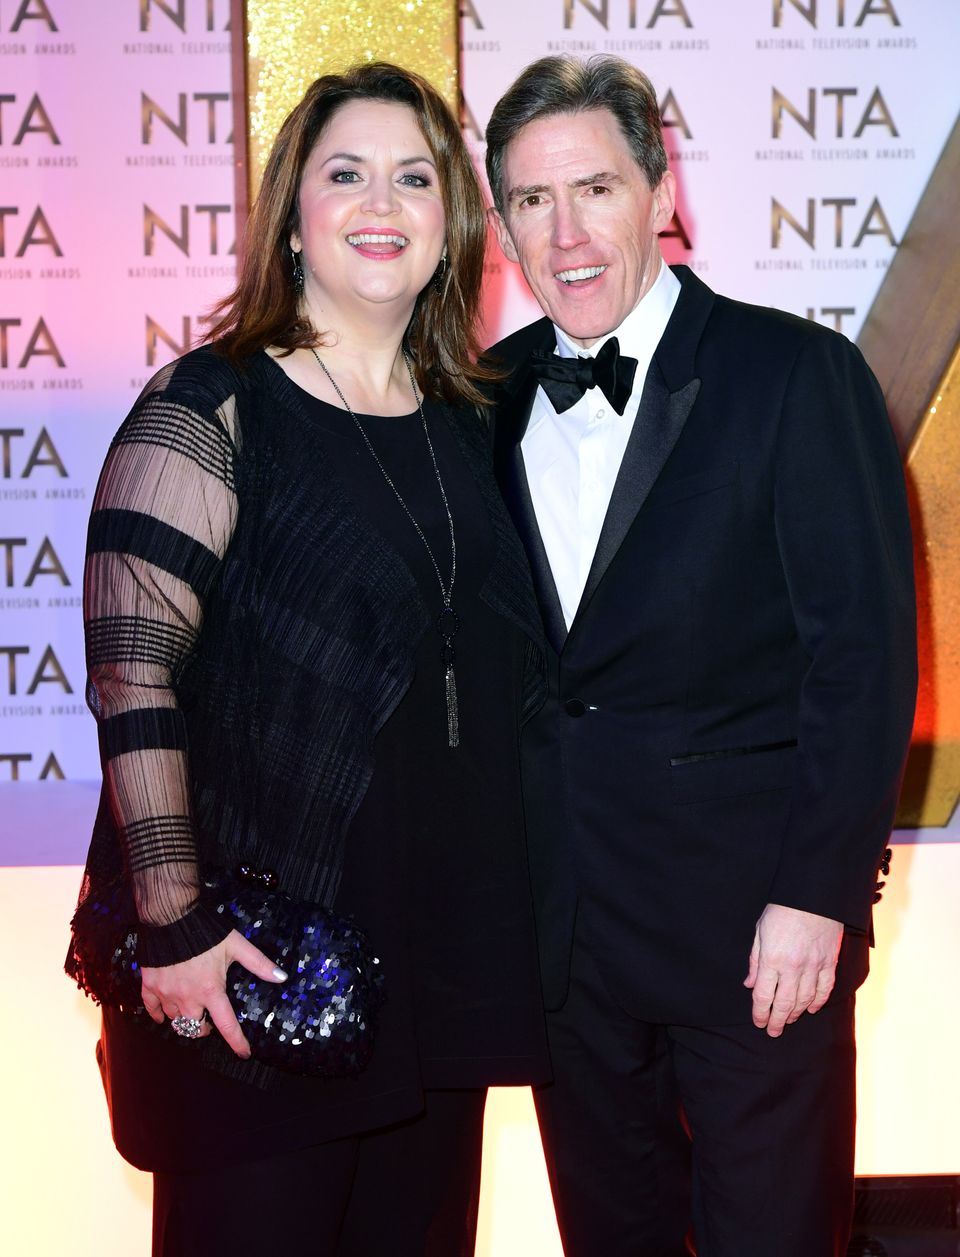 National Television Awards 2020 - Arrivals - London